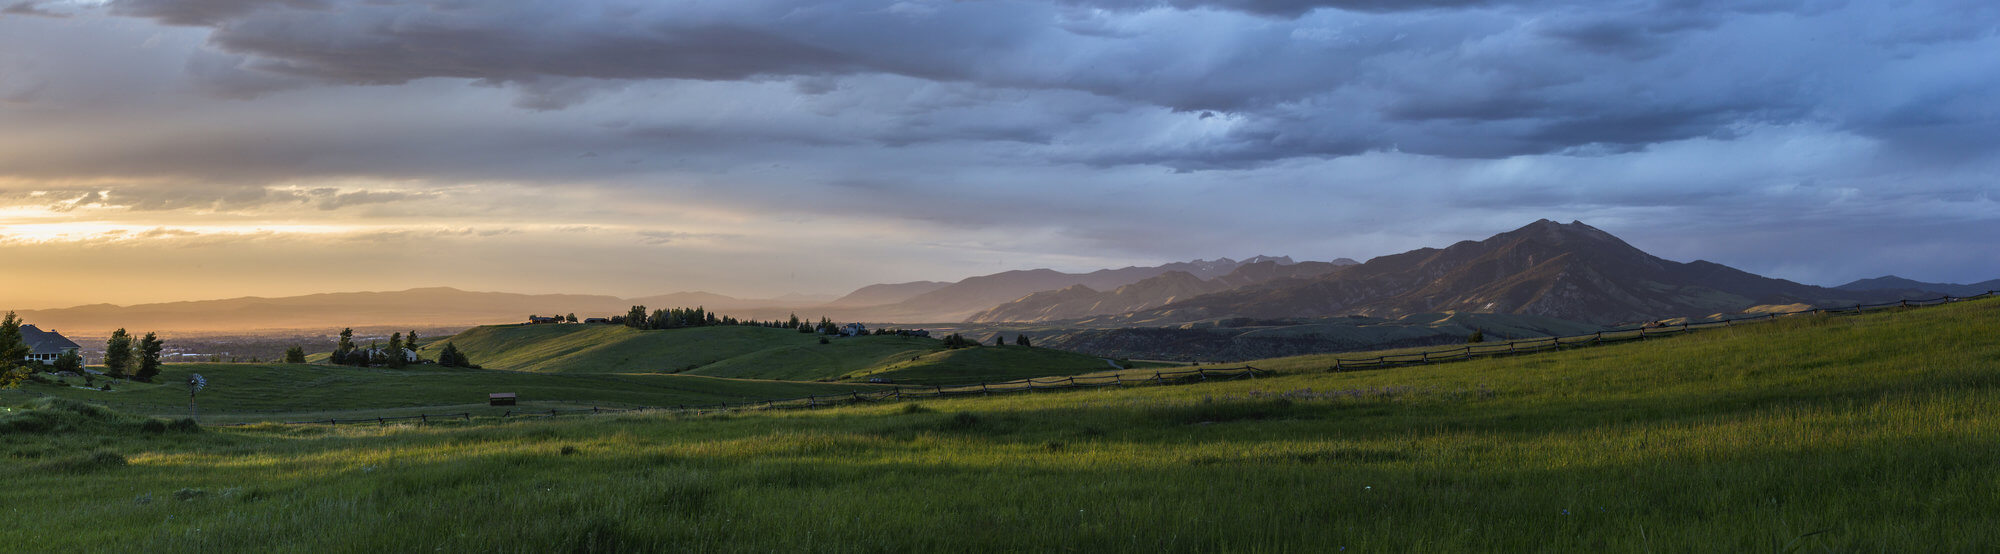 Horizon overlooking the hills and fields in Montana